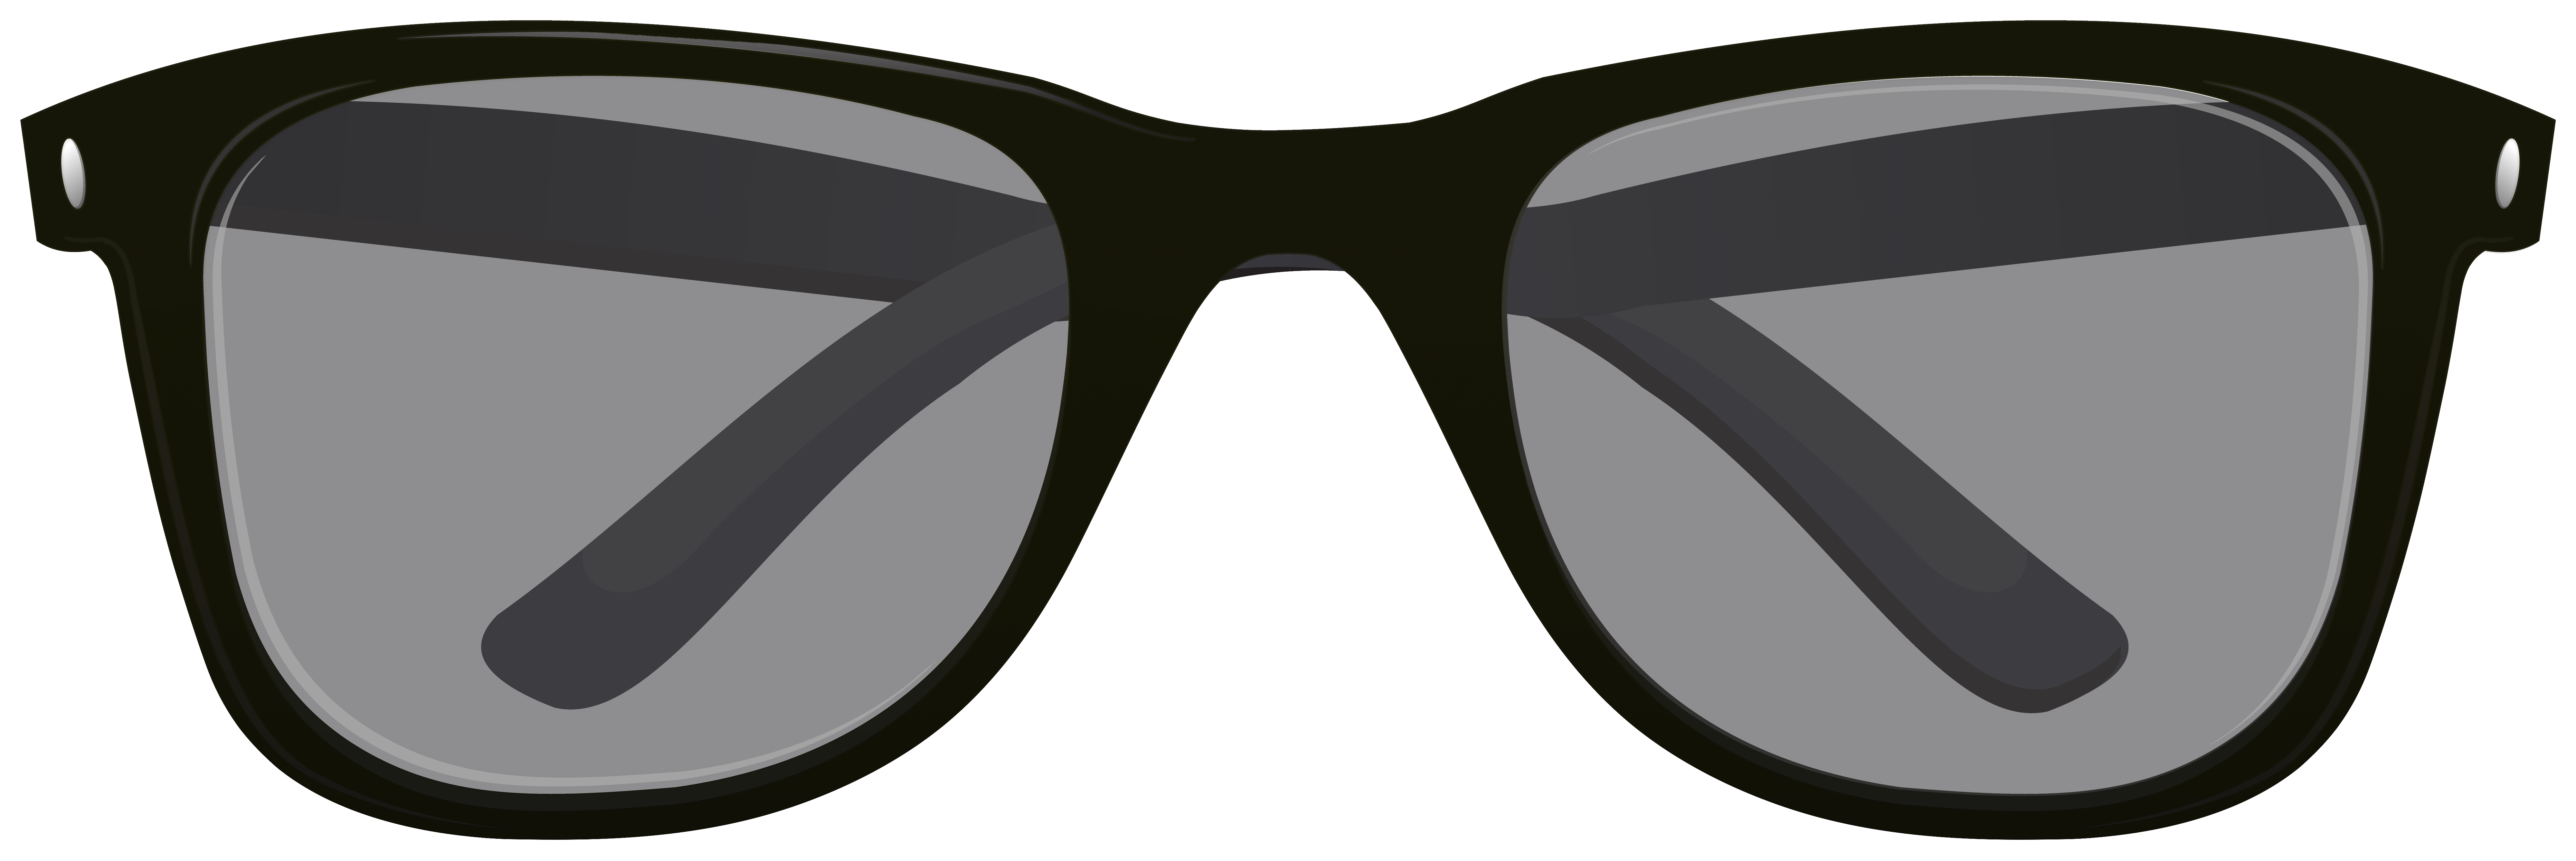 Black sunglasses clipart.